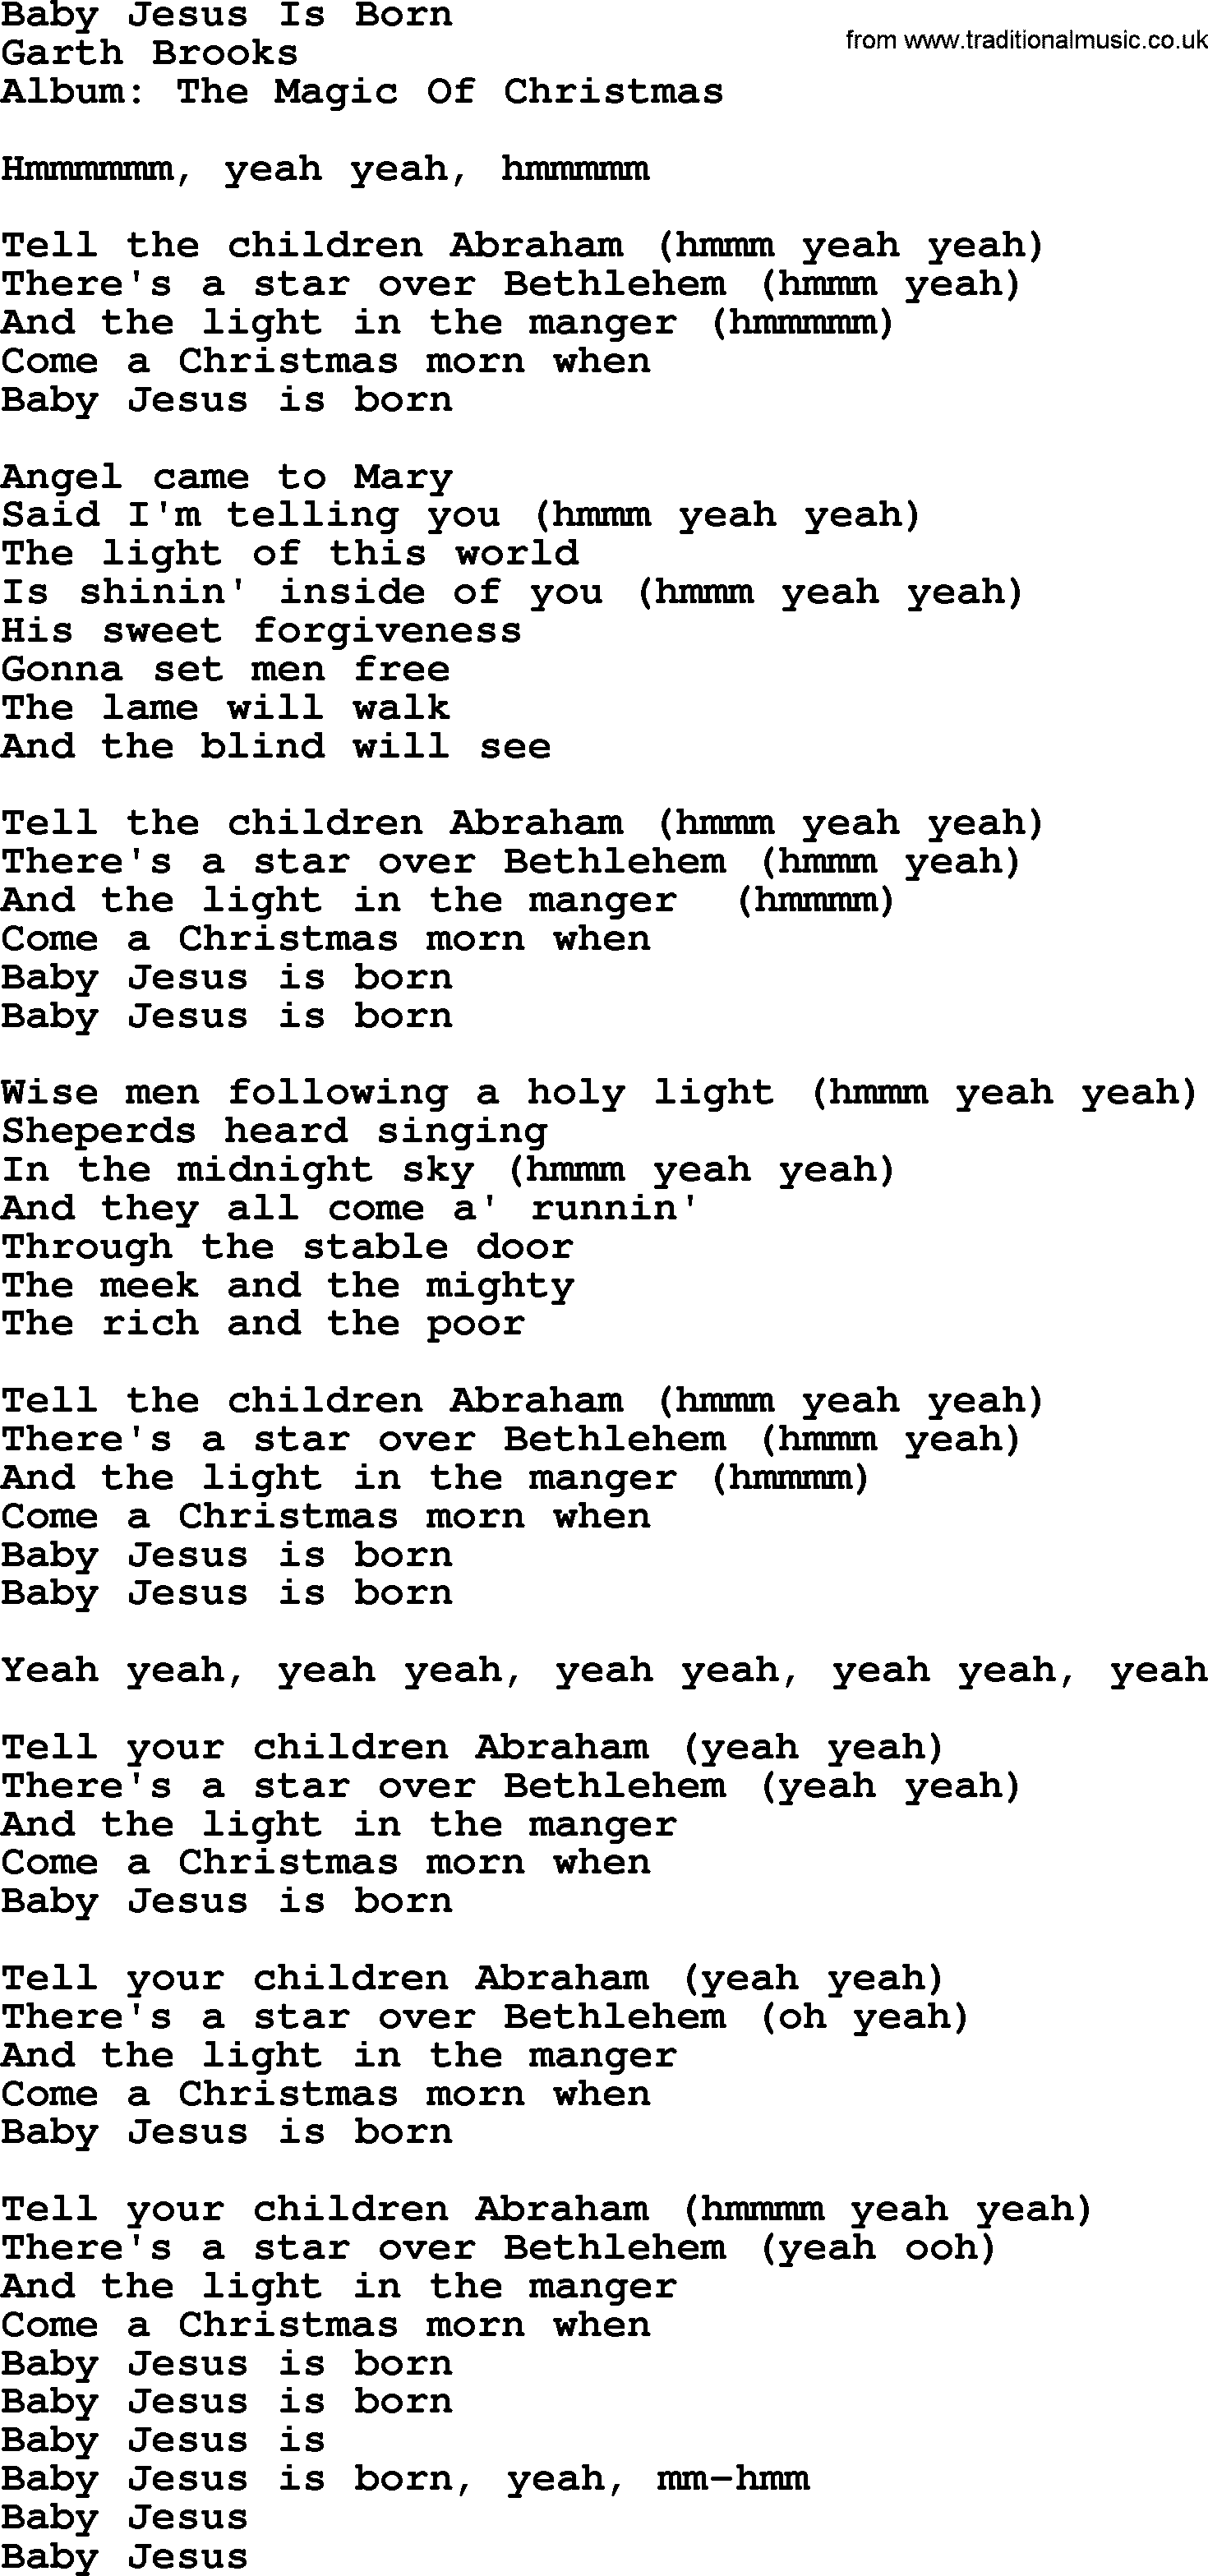 Garth Brooks song: Baby Jesus Is Born, lyrics